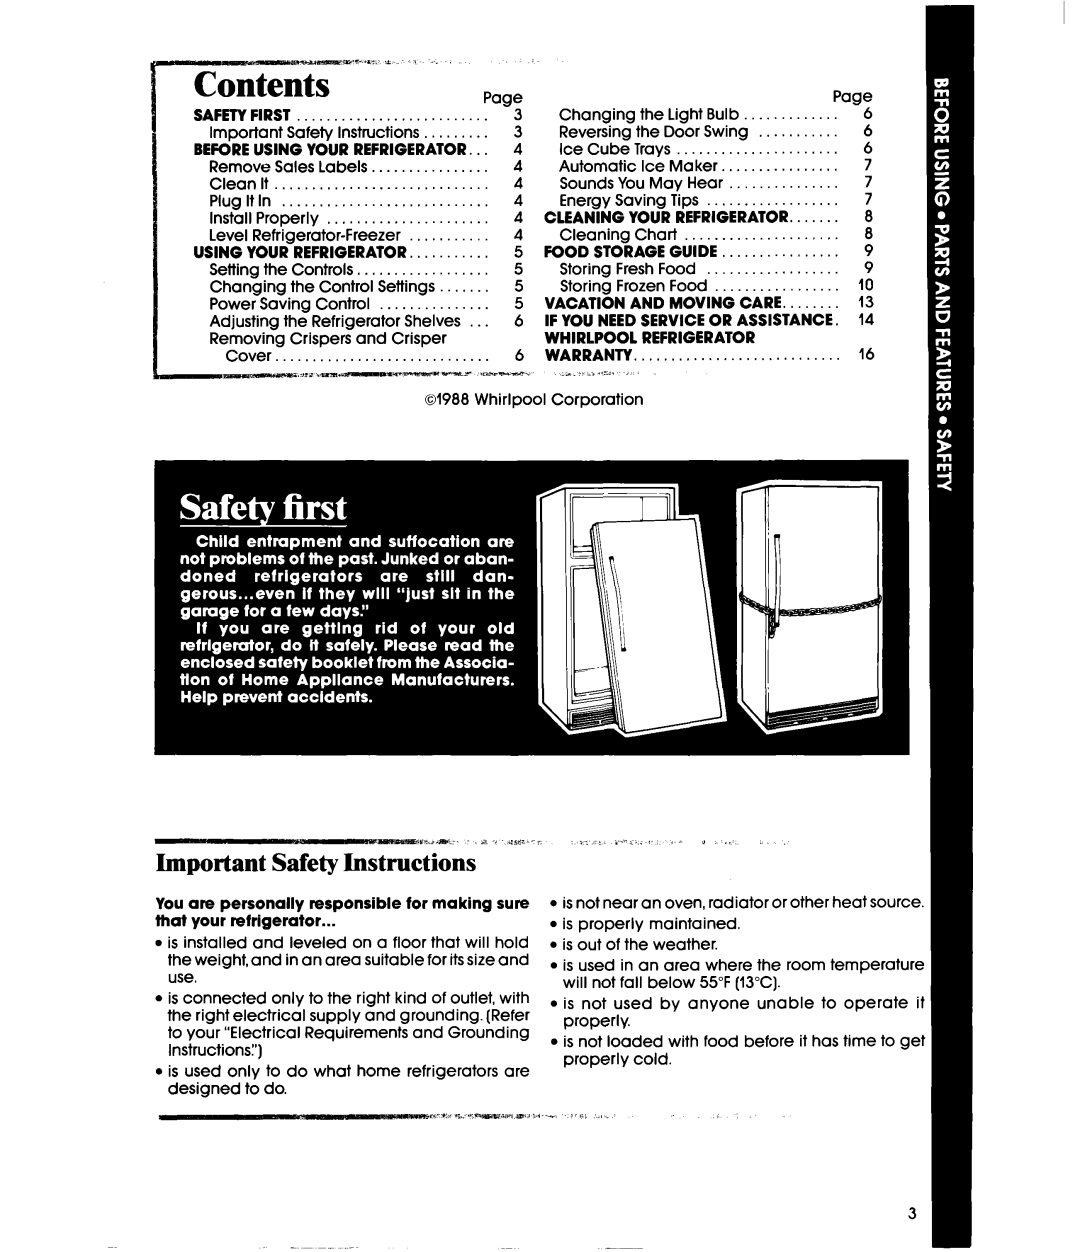 Whirlpool ETl6JM, ETWK manual Contents, Important Safety Instructions 